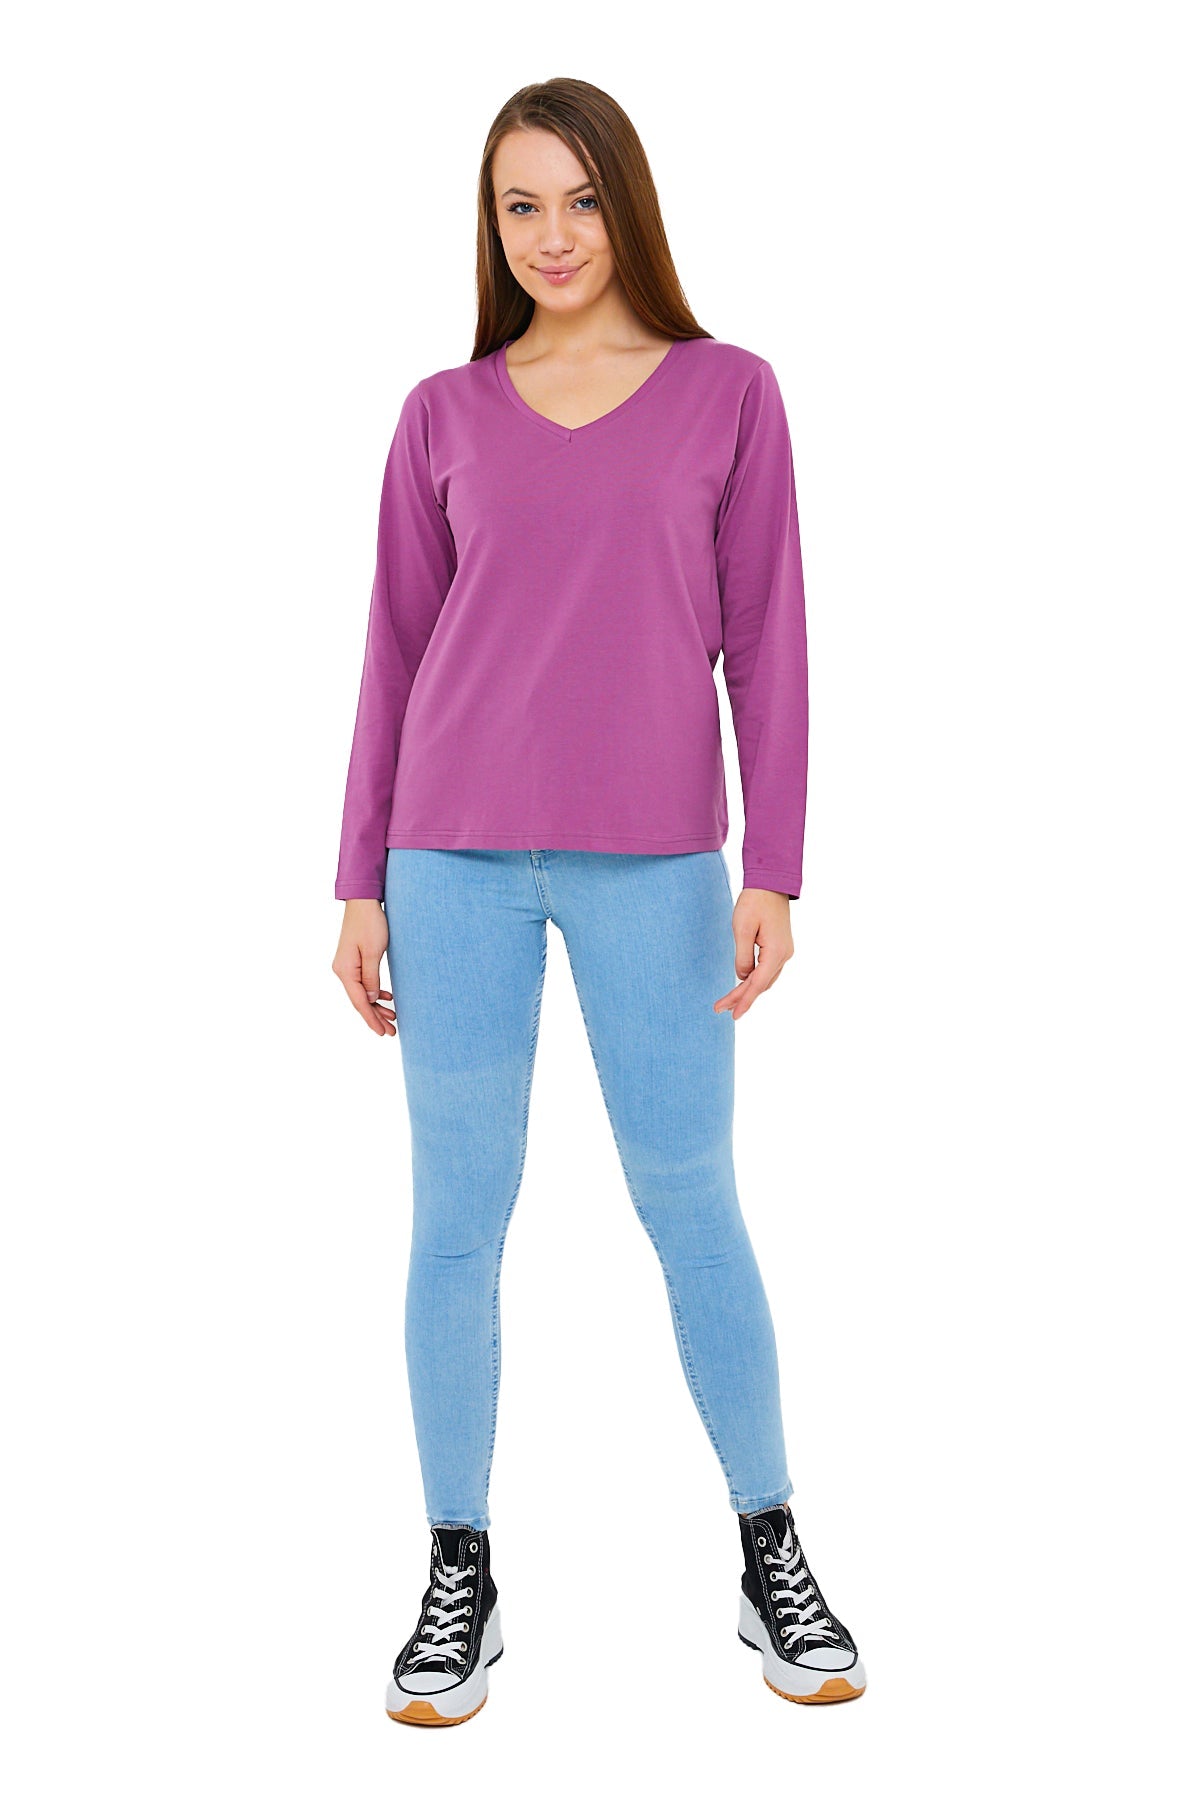 Long Sleeve V-Neck Shirts for Women & Girls - Colorful Pima Cotton-81